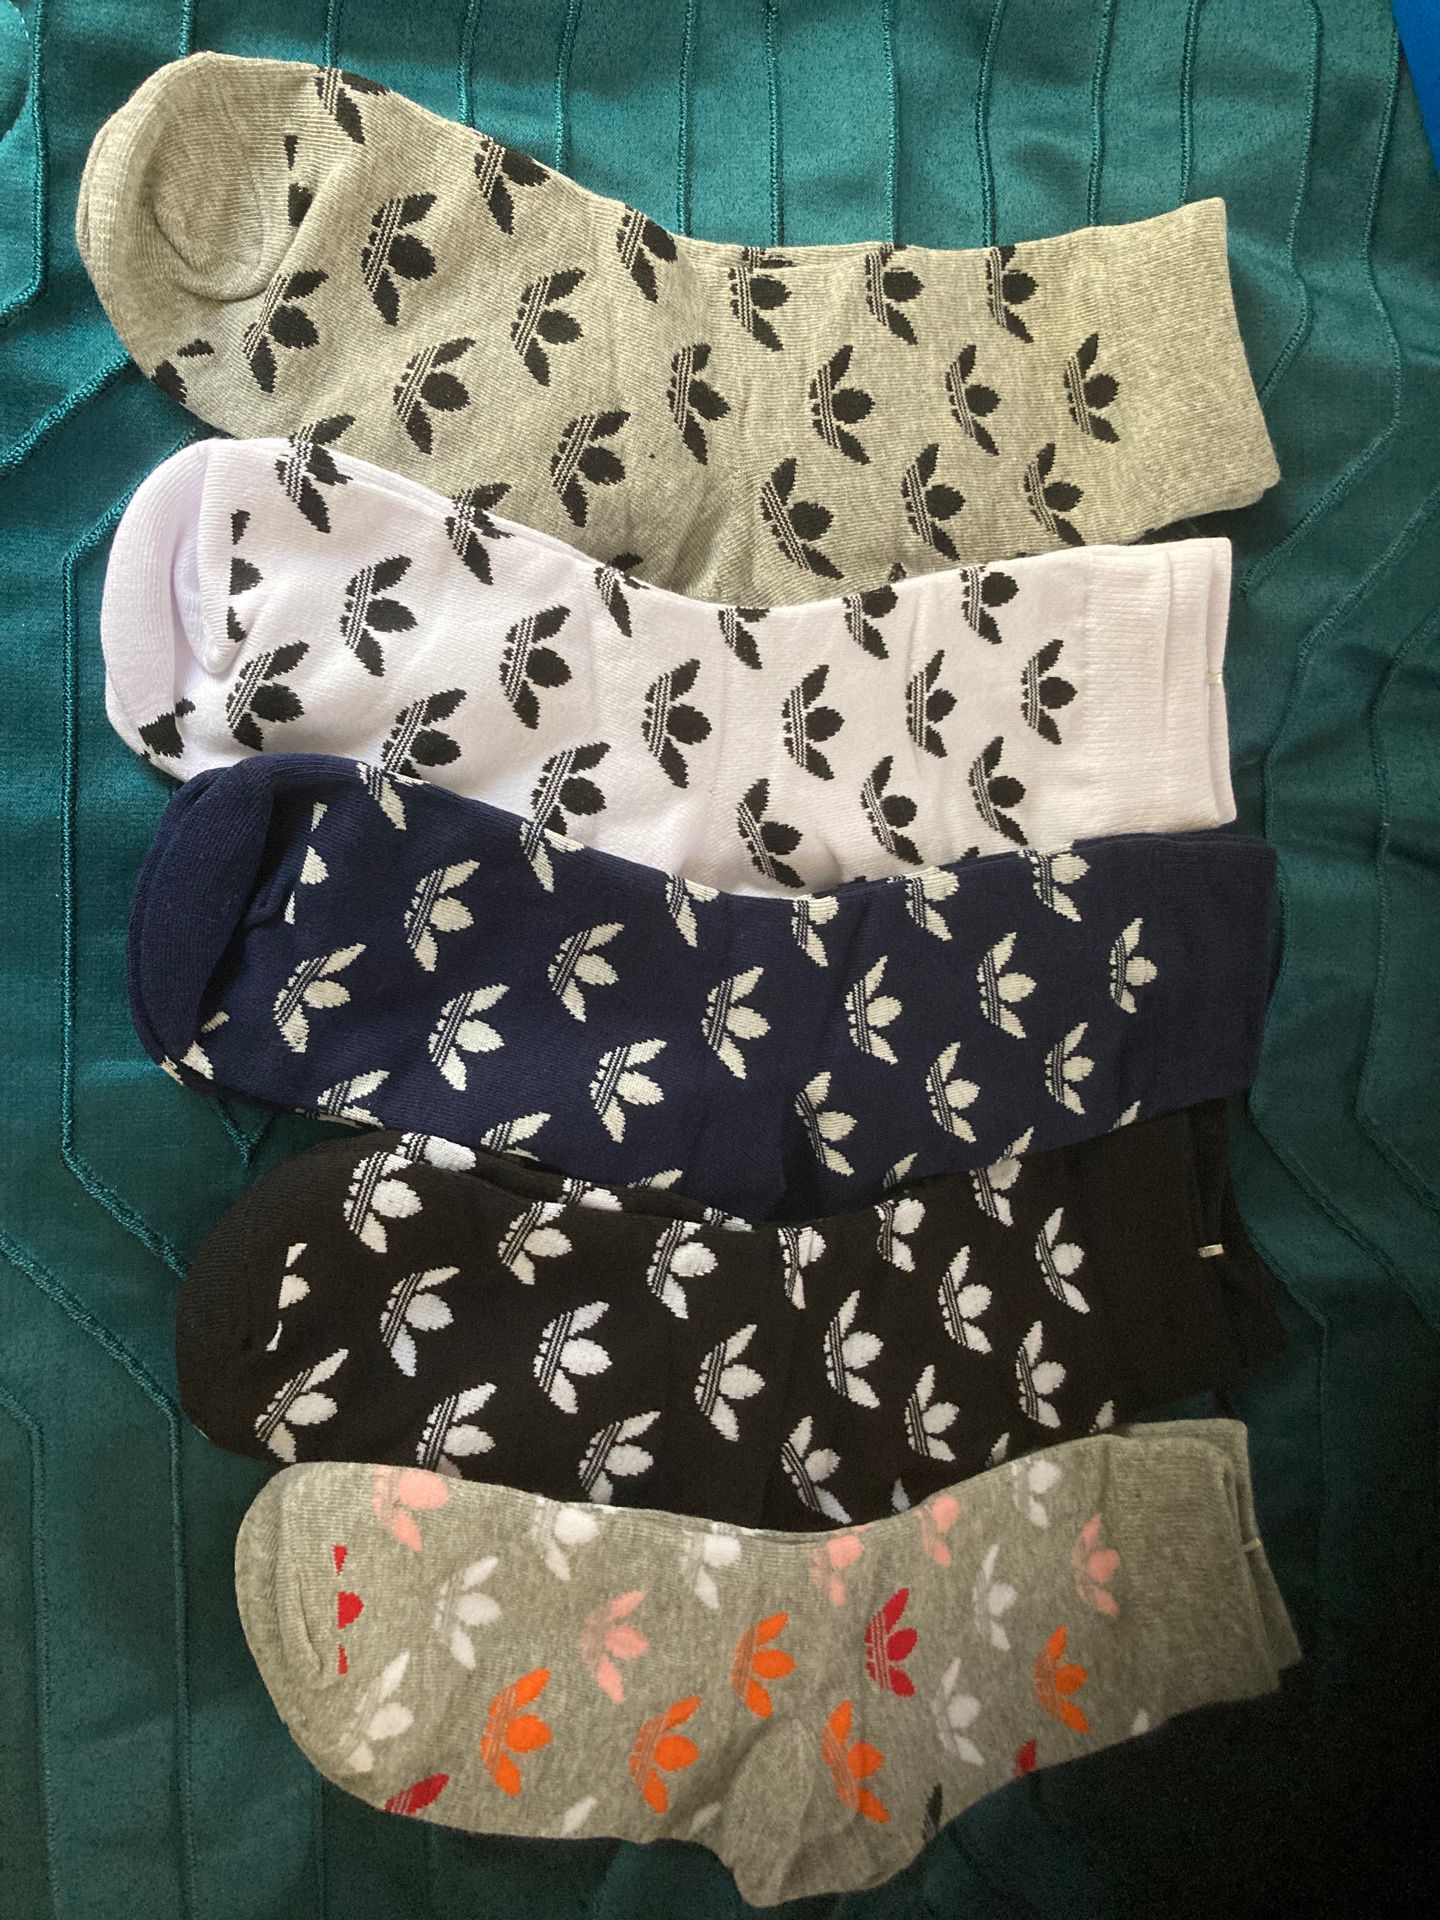 Flavorful Adidas socks